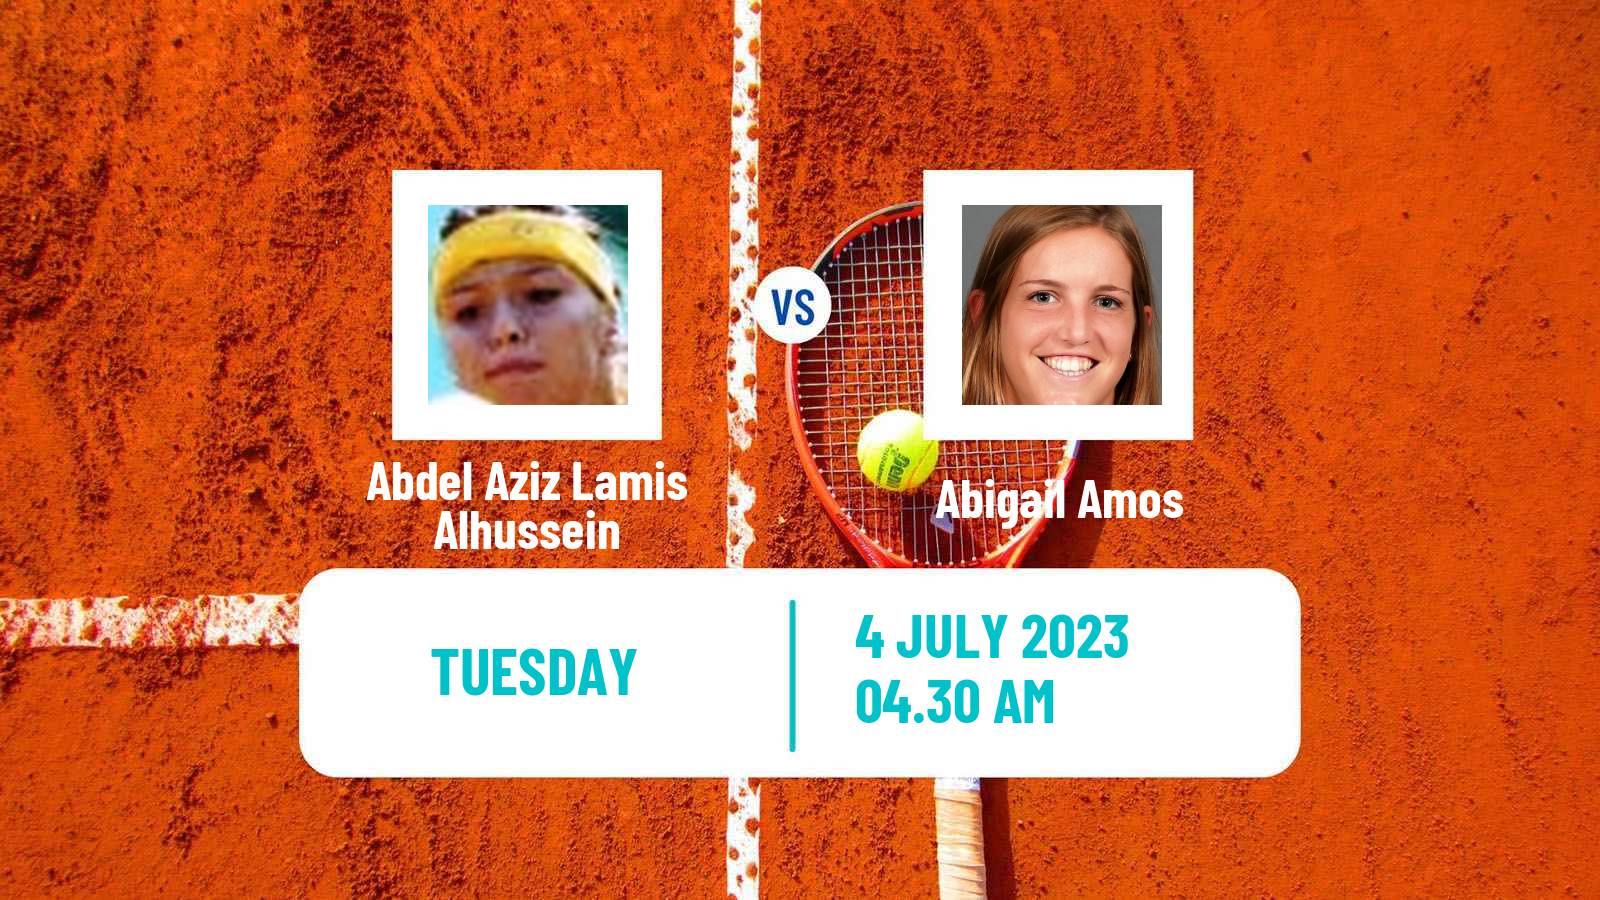 Tennis ITF W15 Monastir 22 Women Abdel Aziz Lamis Alhussein - Abigail Amos